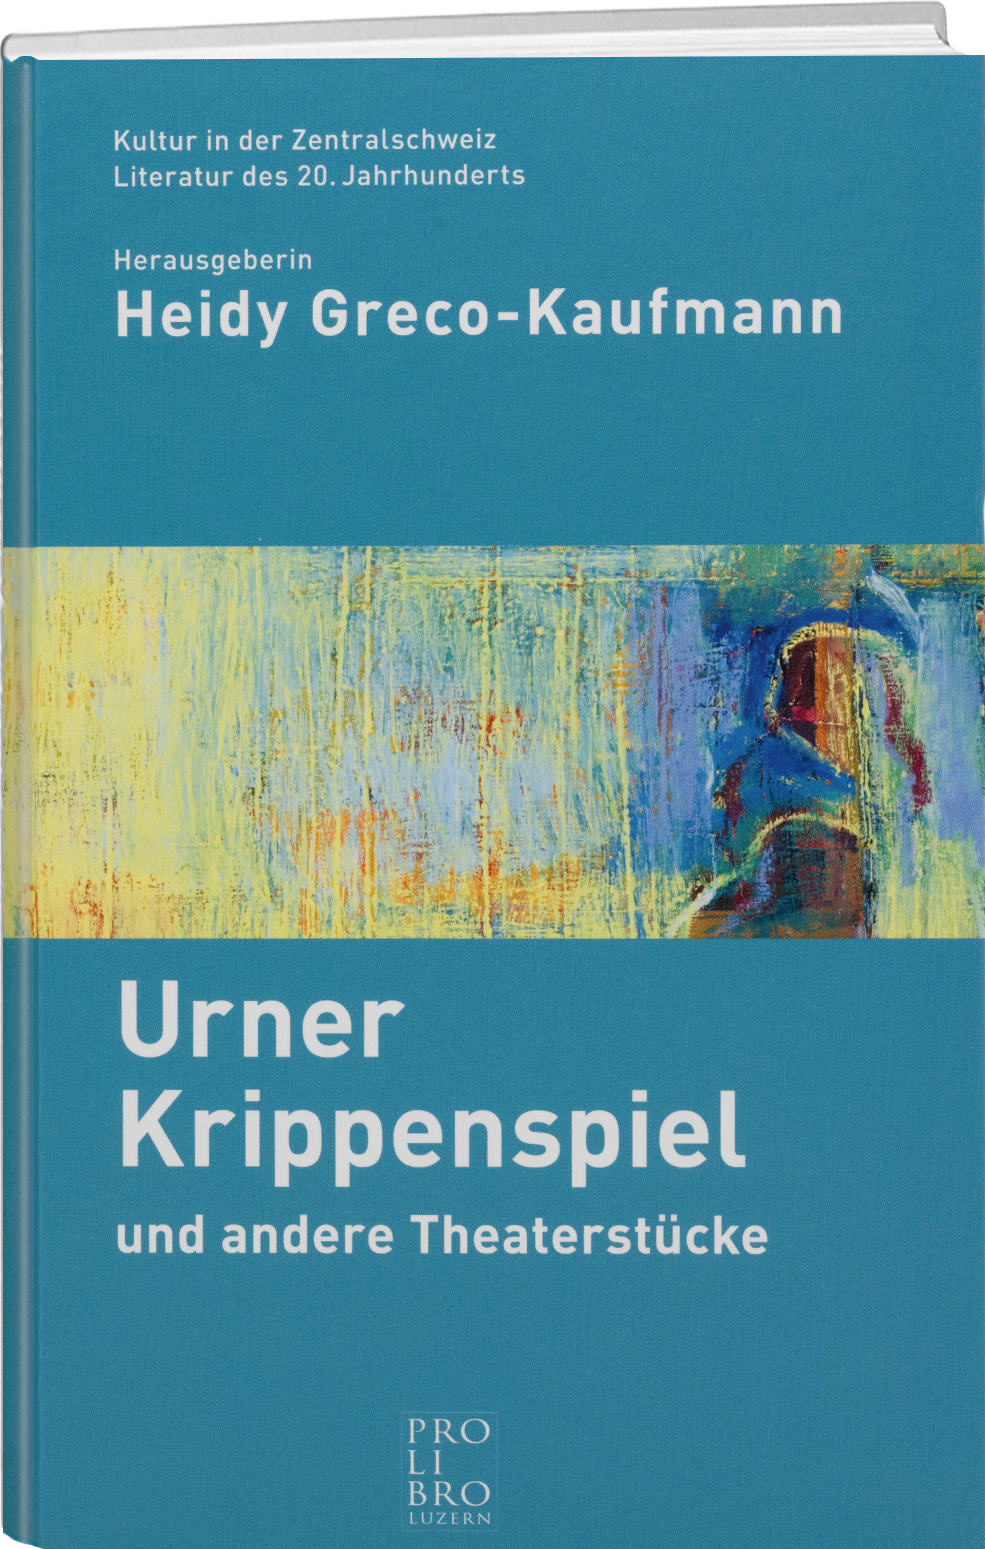 Heidy Greco-Kaufmann: Urner Krippenspiel - prolibro.ch